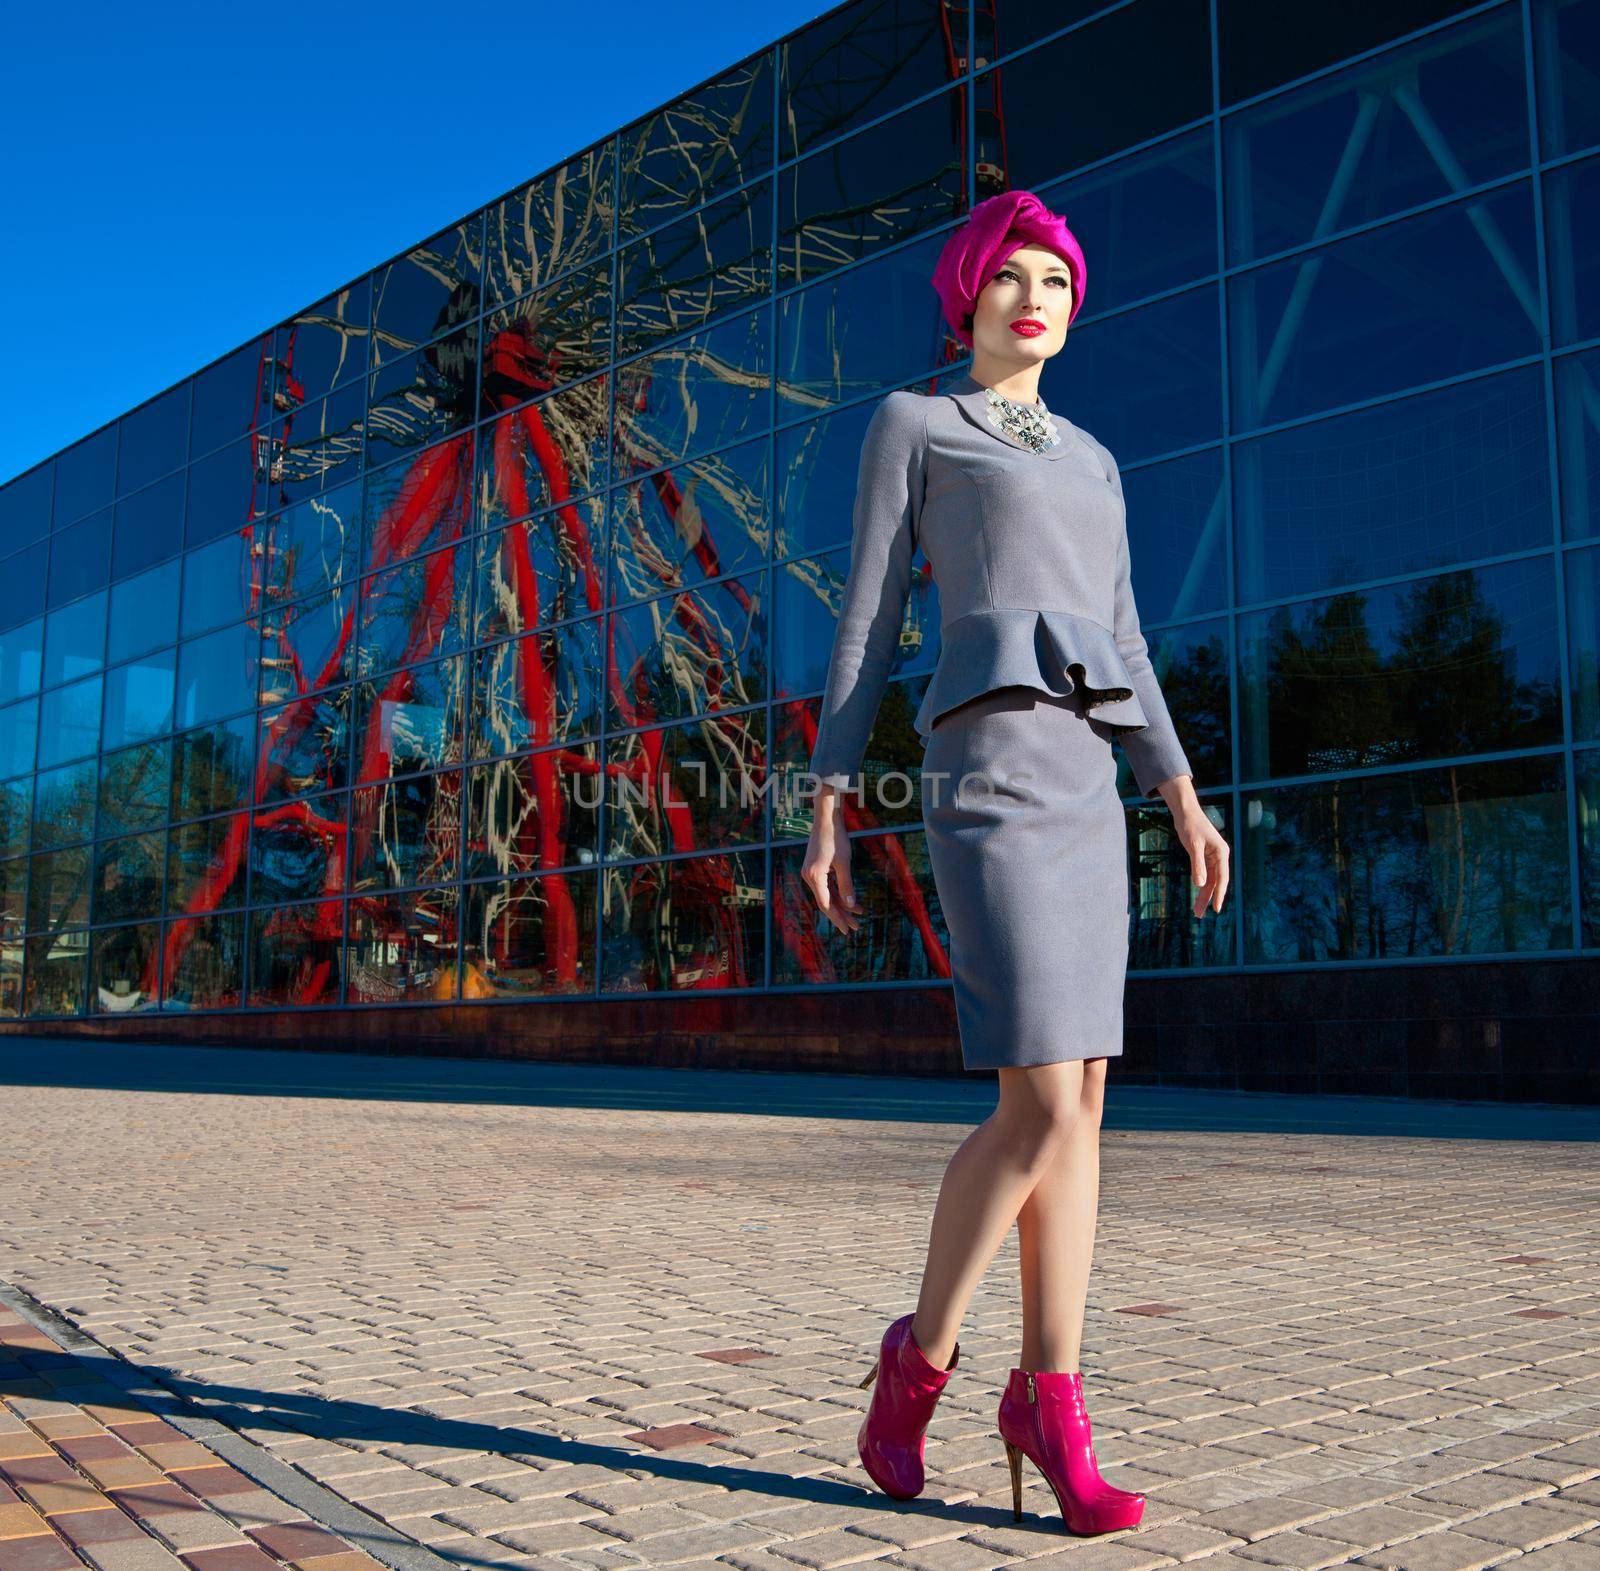 Beautiful woman in front of a building by Julenochek